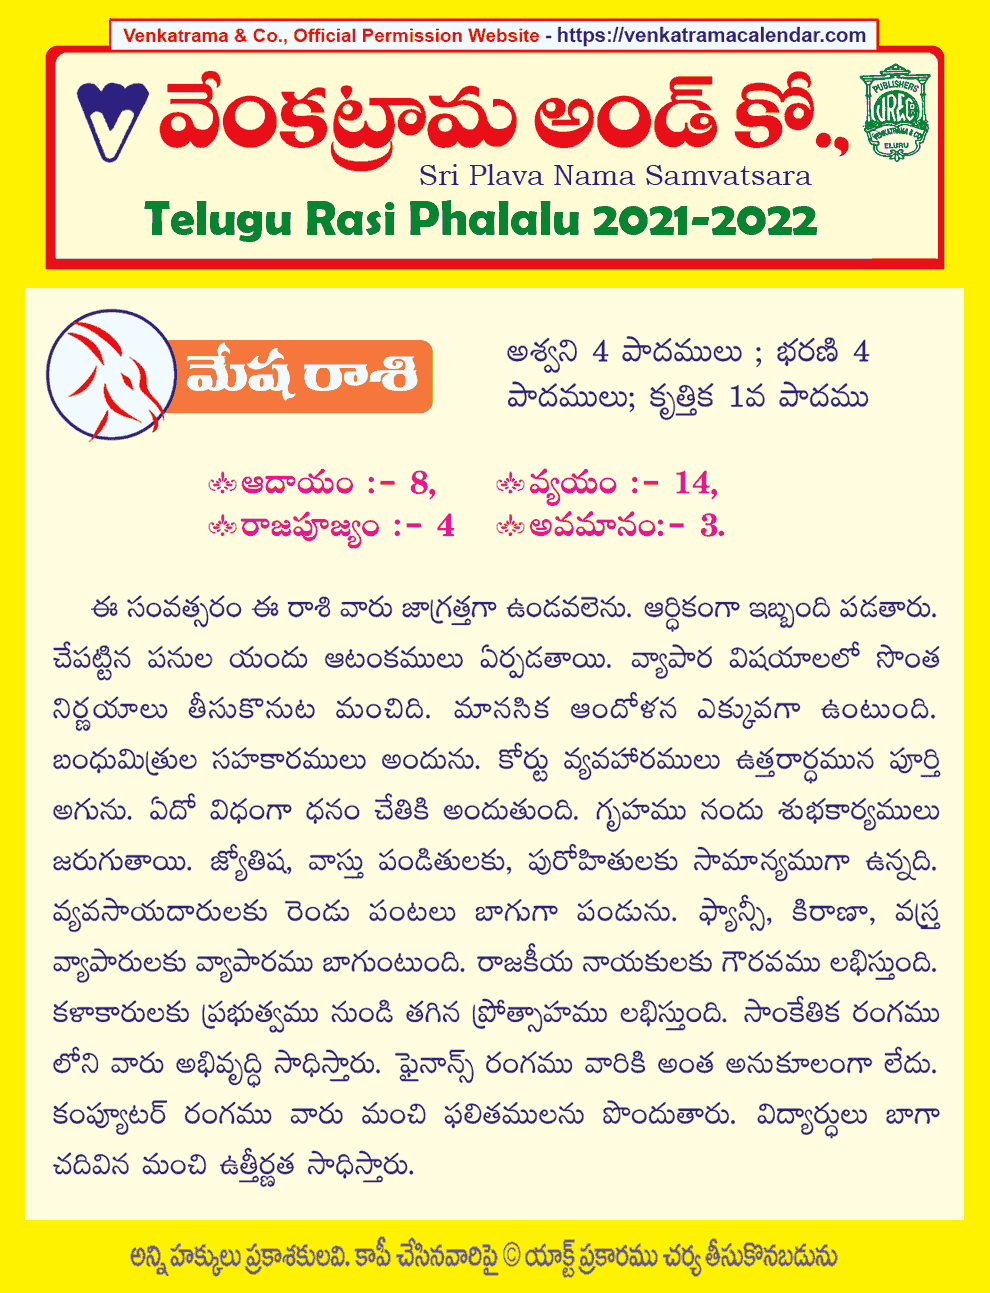 2021-2022-Rasi-Phalalu-Venkatrama-Co-Mesha.png